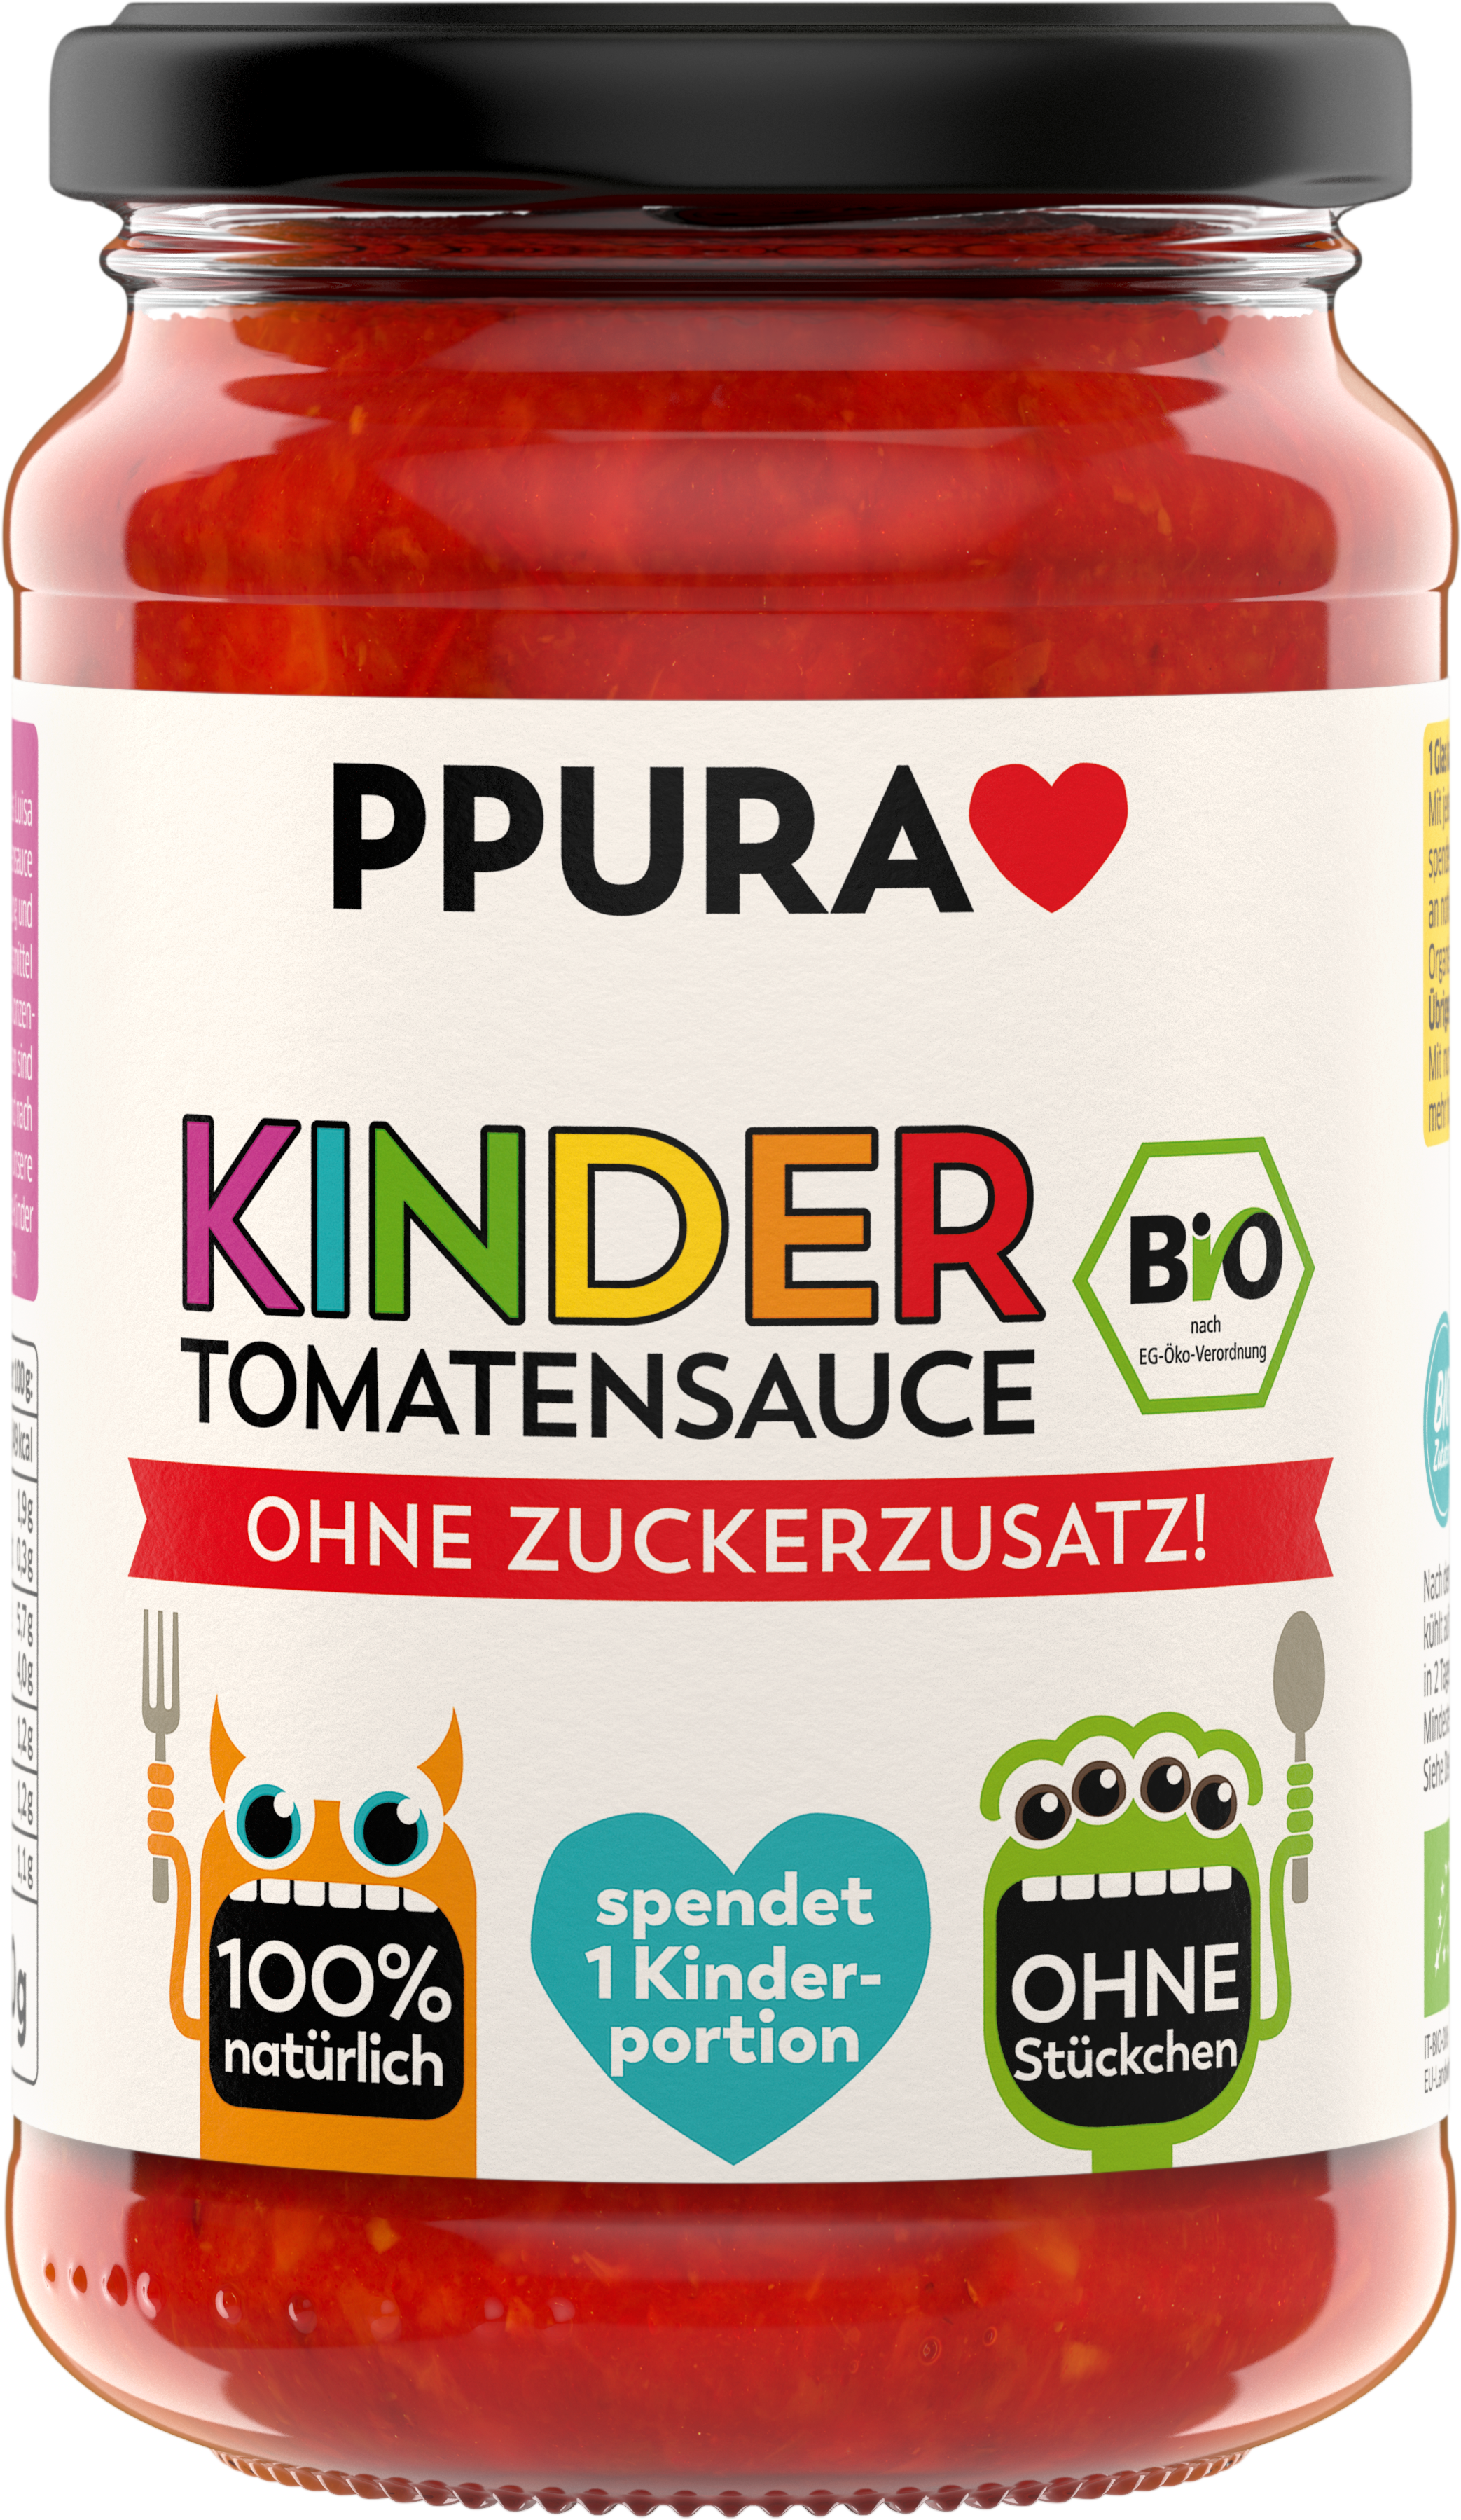 PPURA Kinder Tomatensauce - 340 g